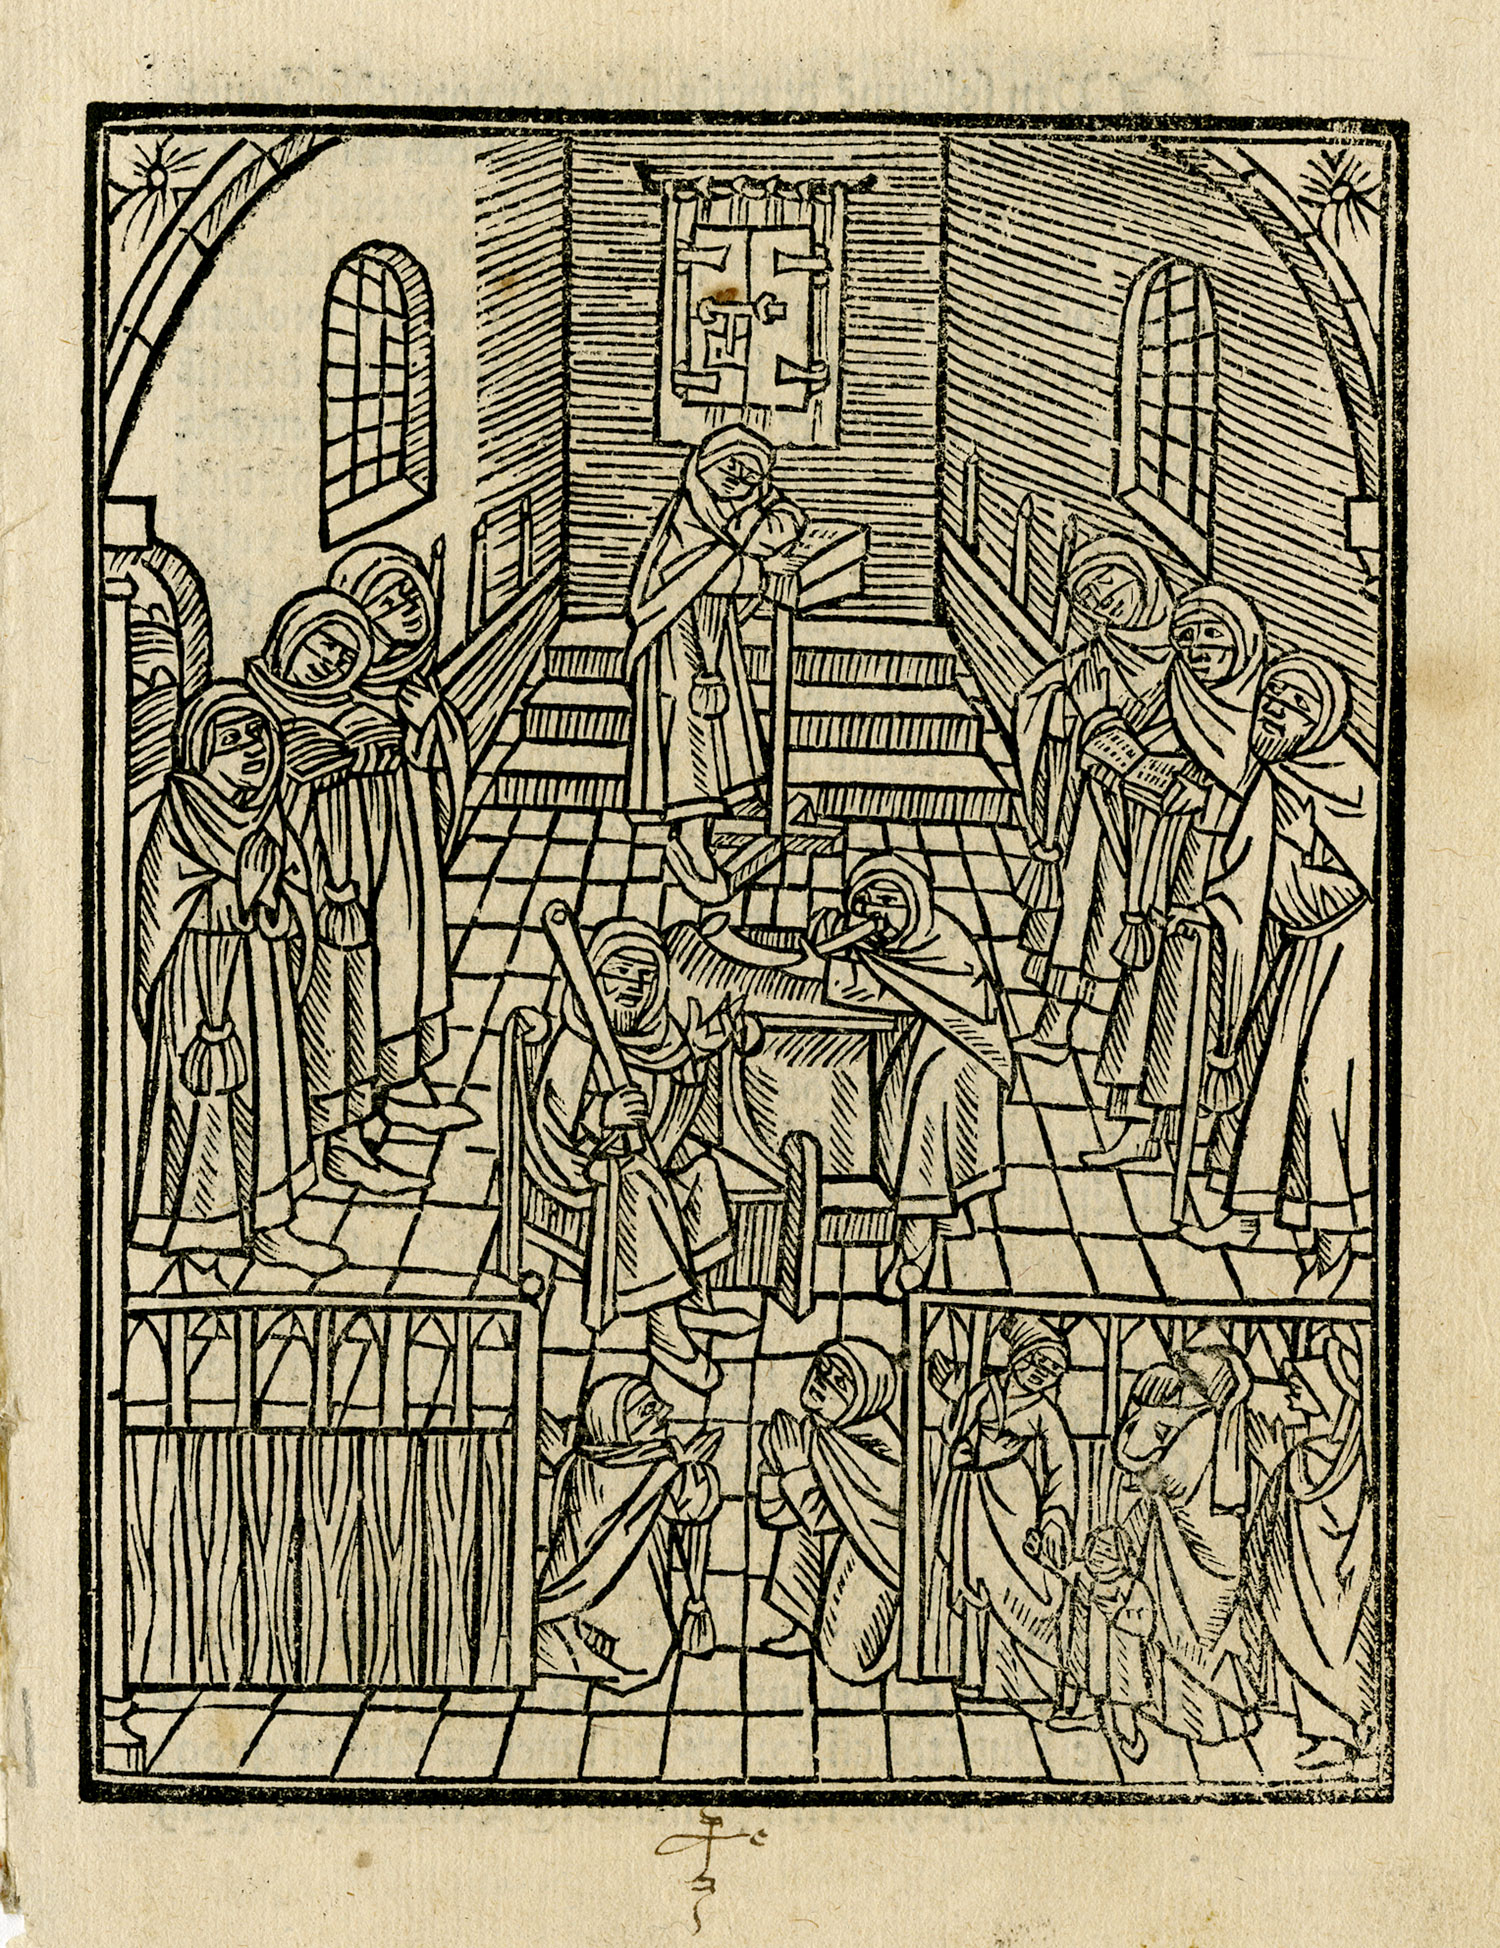 Early German print shows Rosh Hashanah liturgy